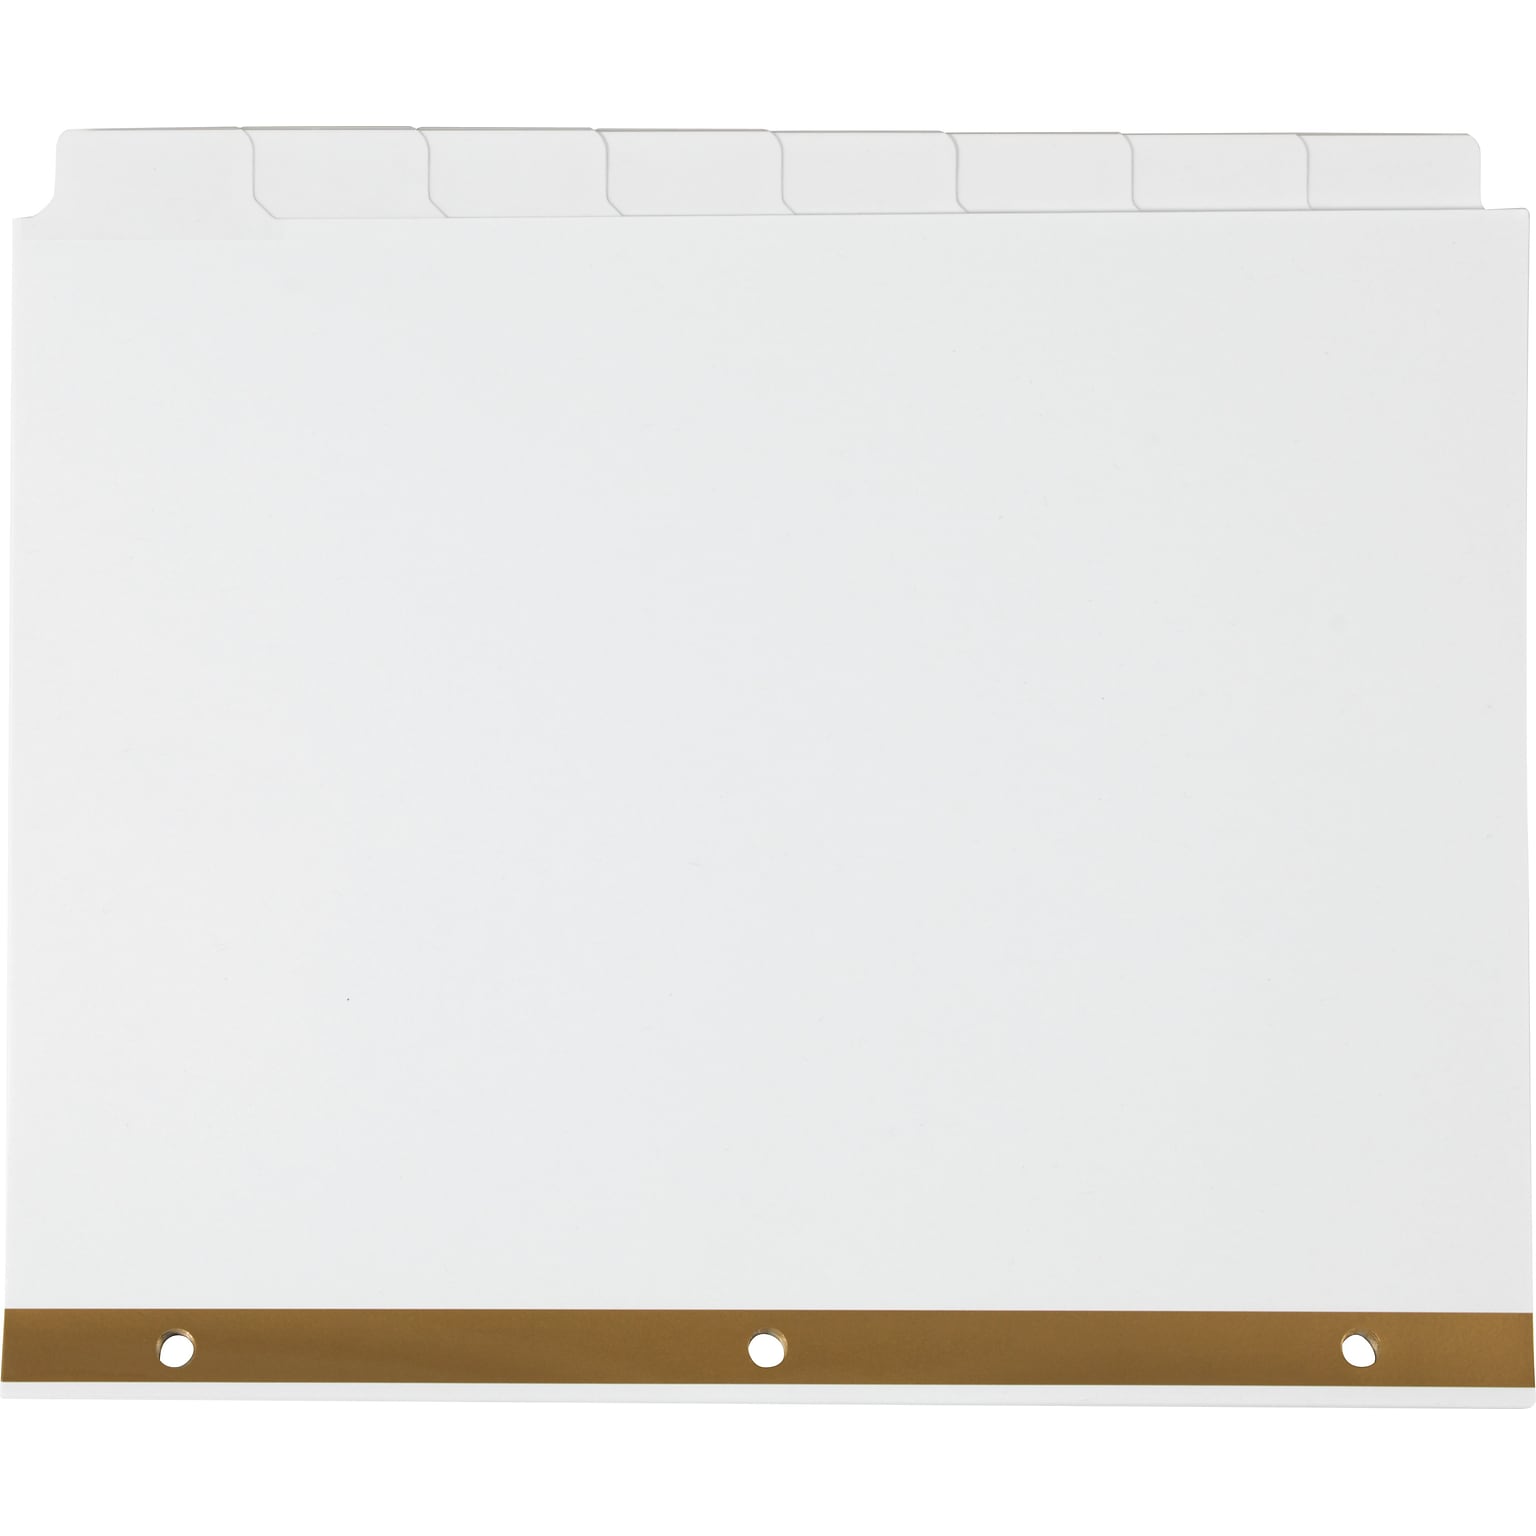 Staples Large Tab Write-On Dividers, 8-Tab Set, White, 4/pack